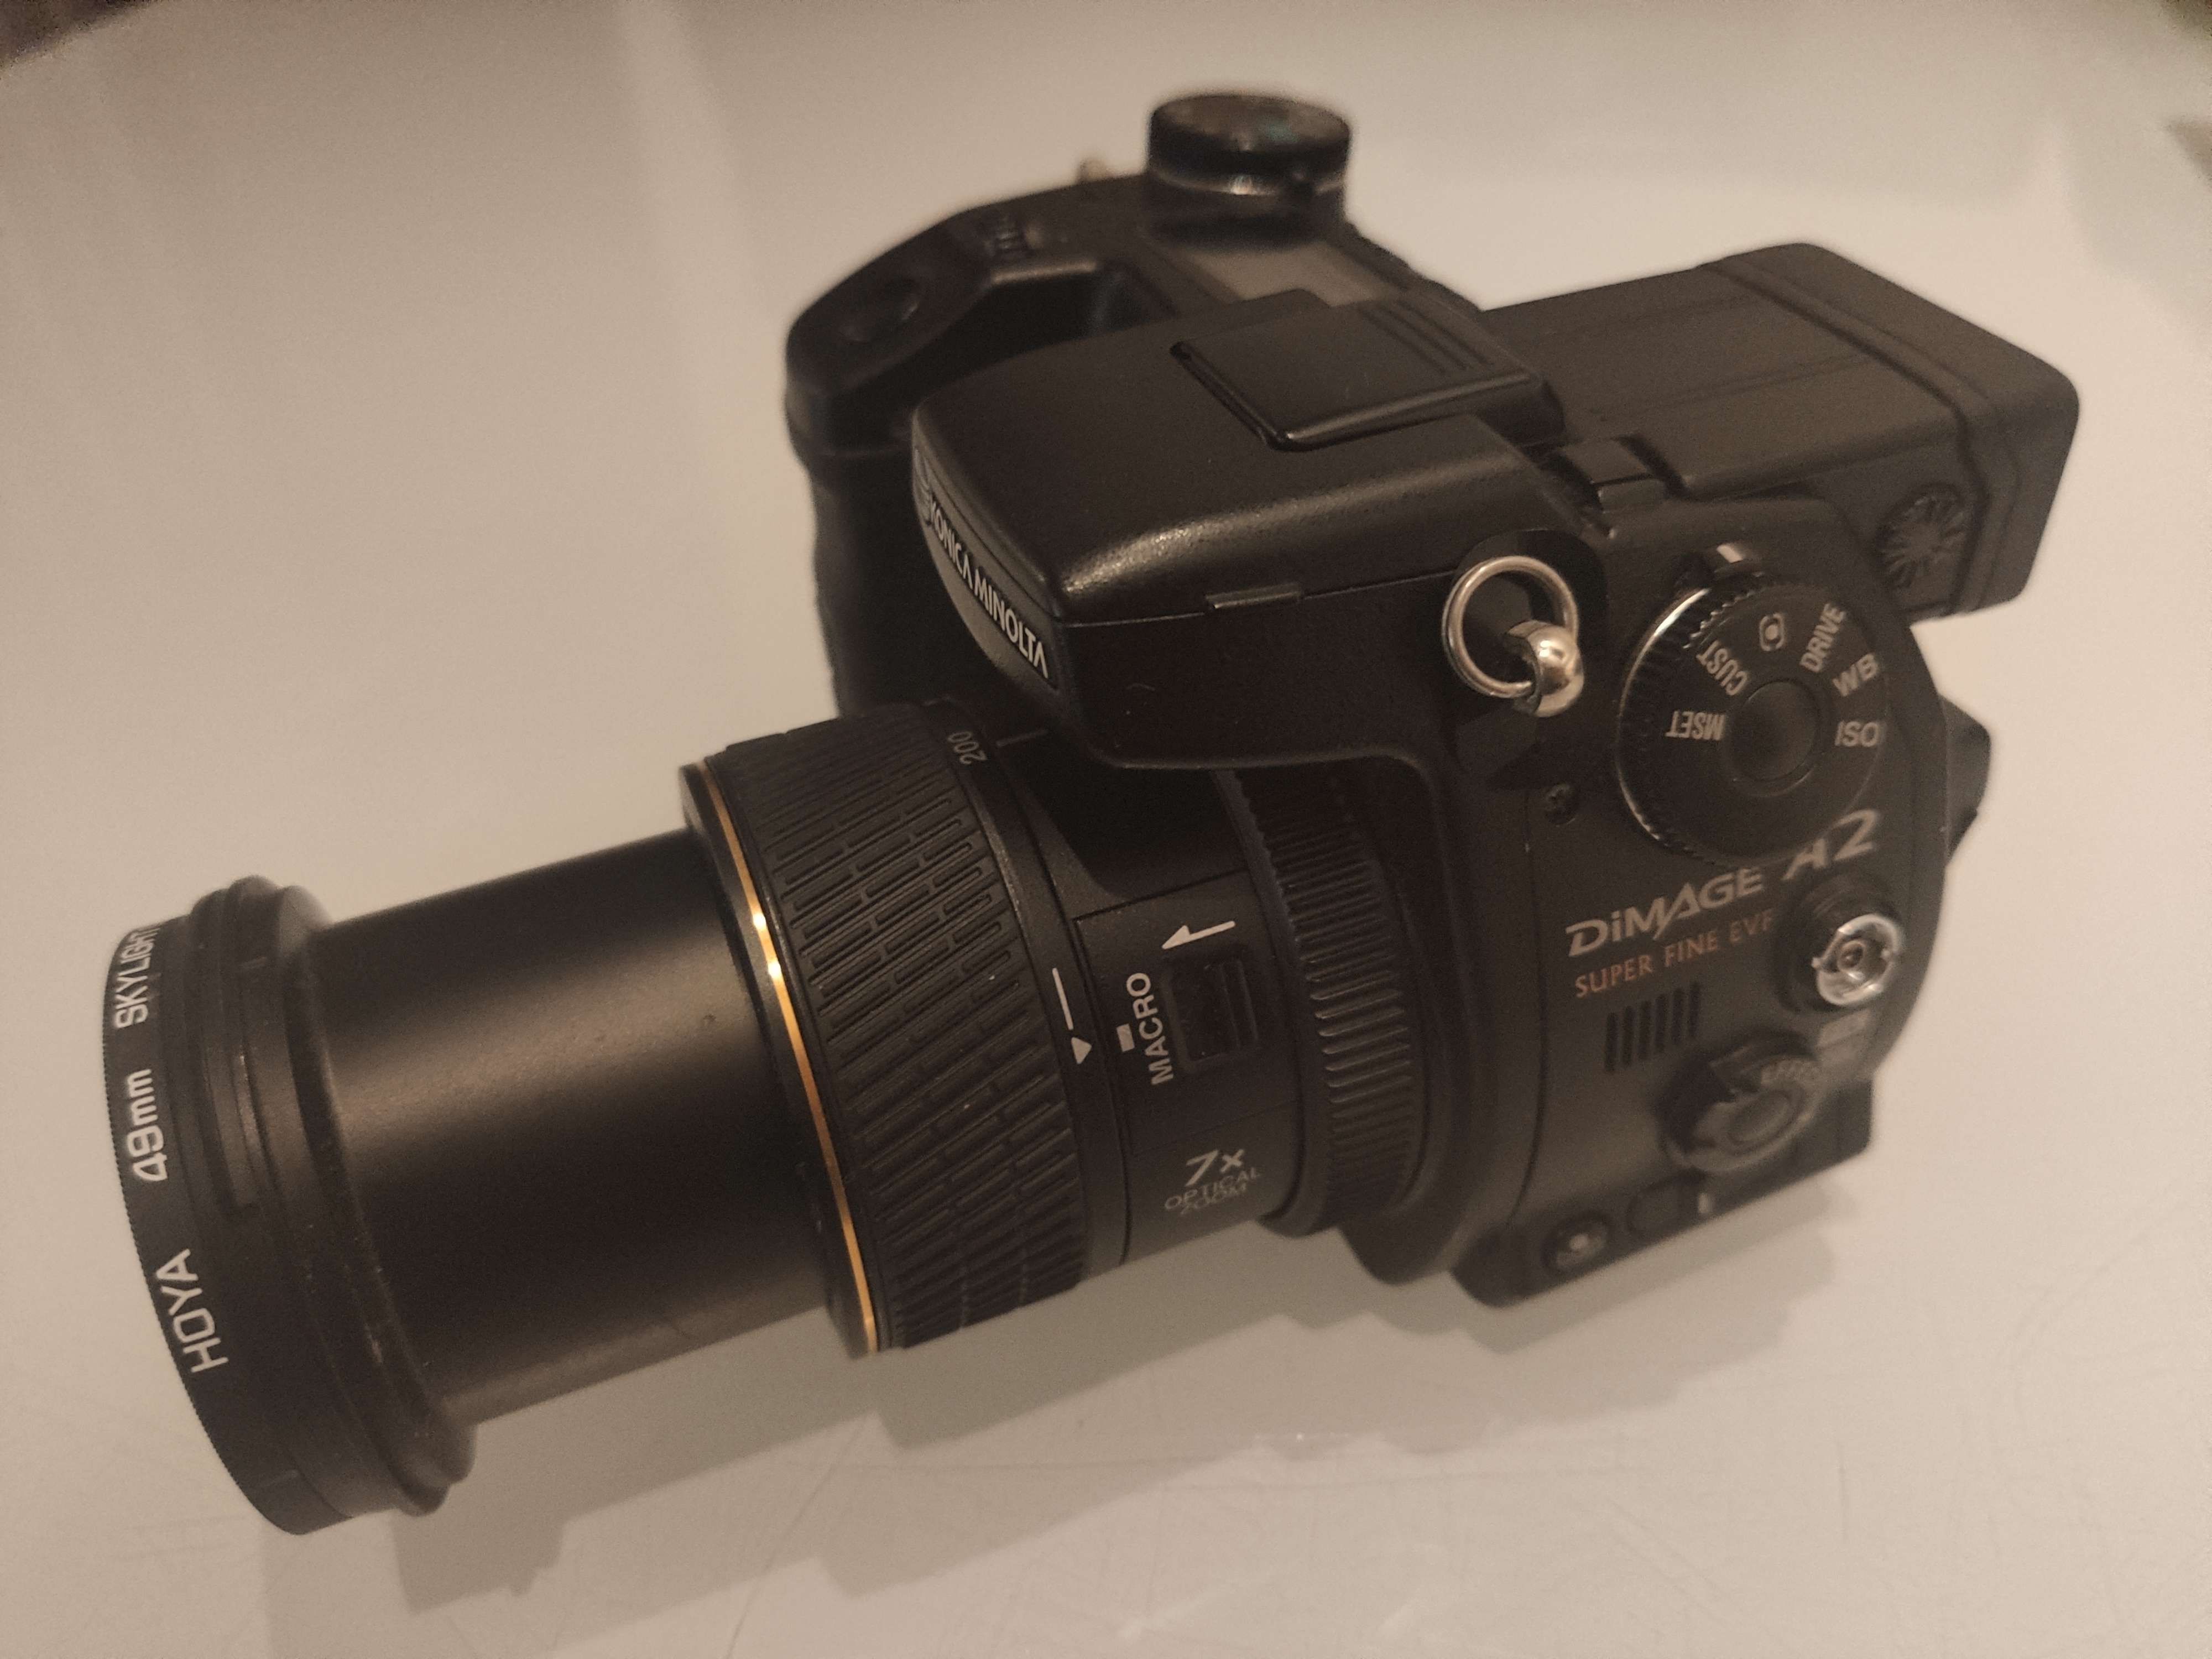 A Konica Minolta Dimage A2 Digital Camera Kit. 2 X Batteries, Wide Lens Converter and More. - Image 6 of 7